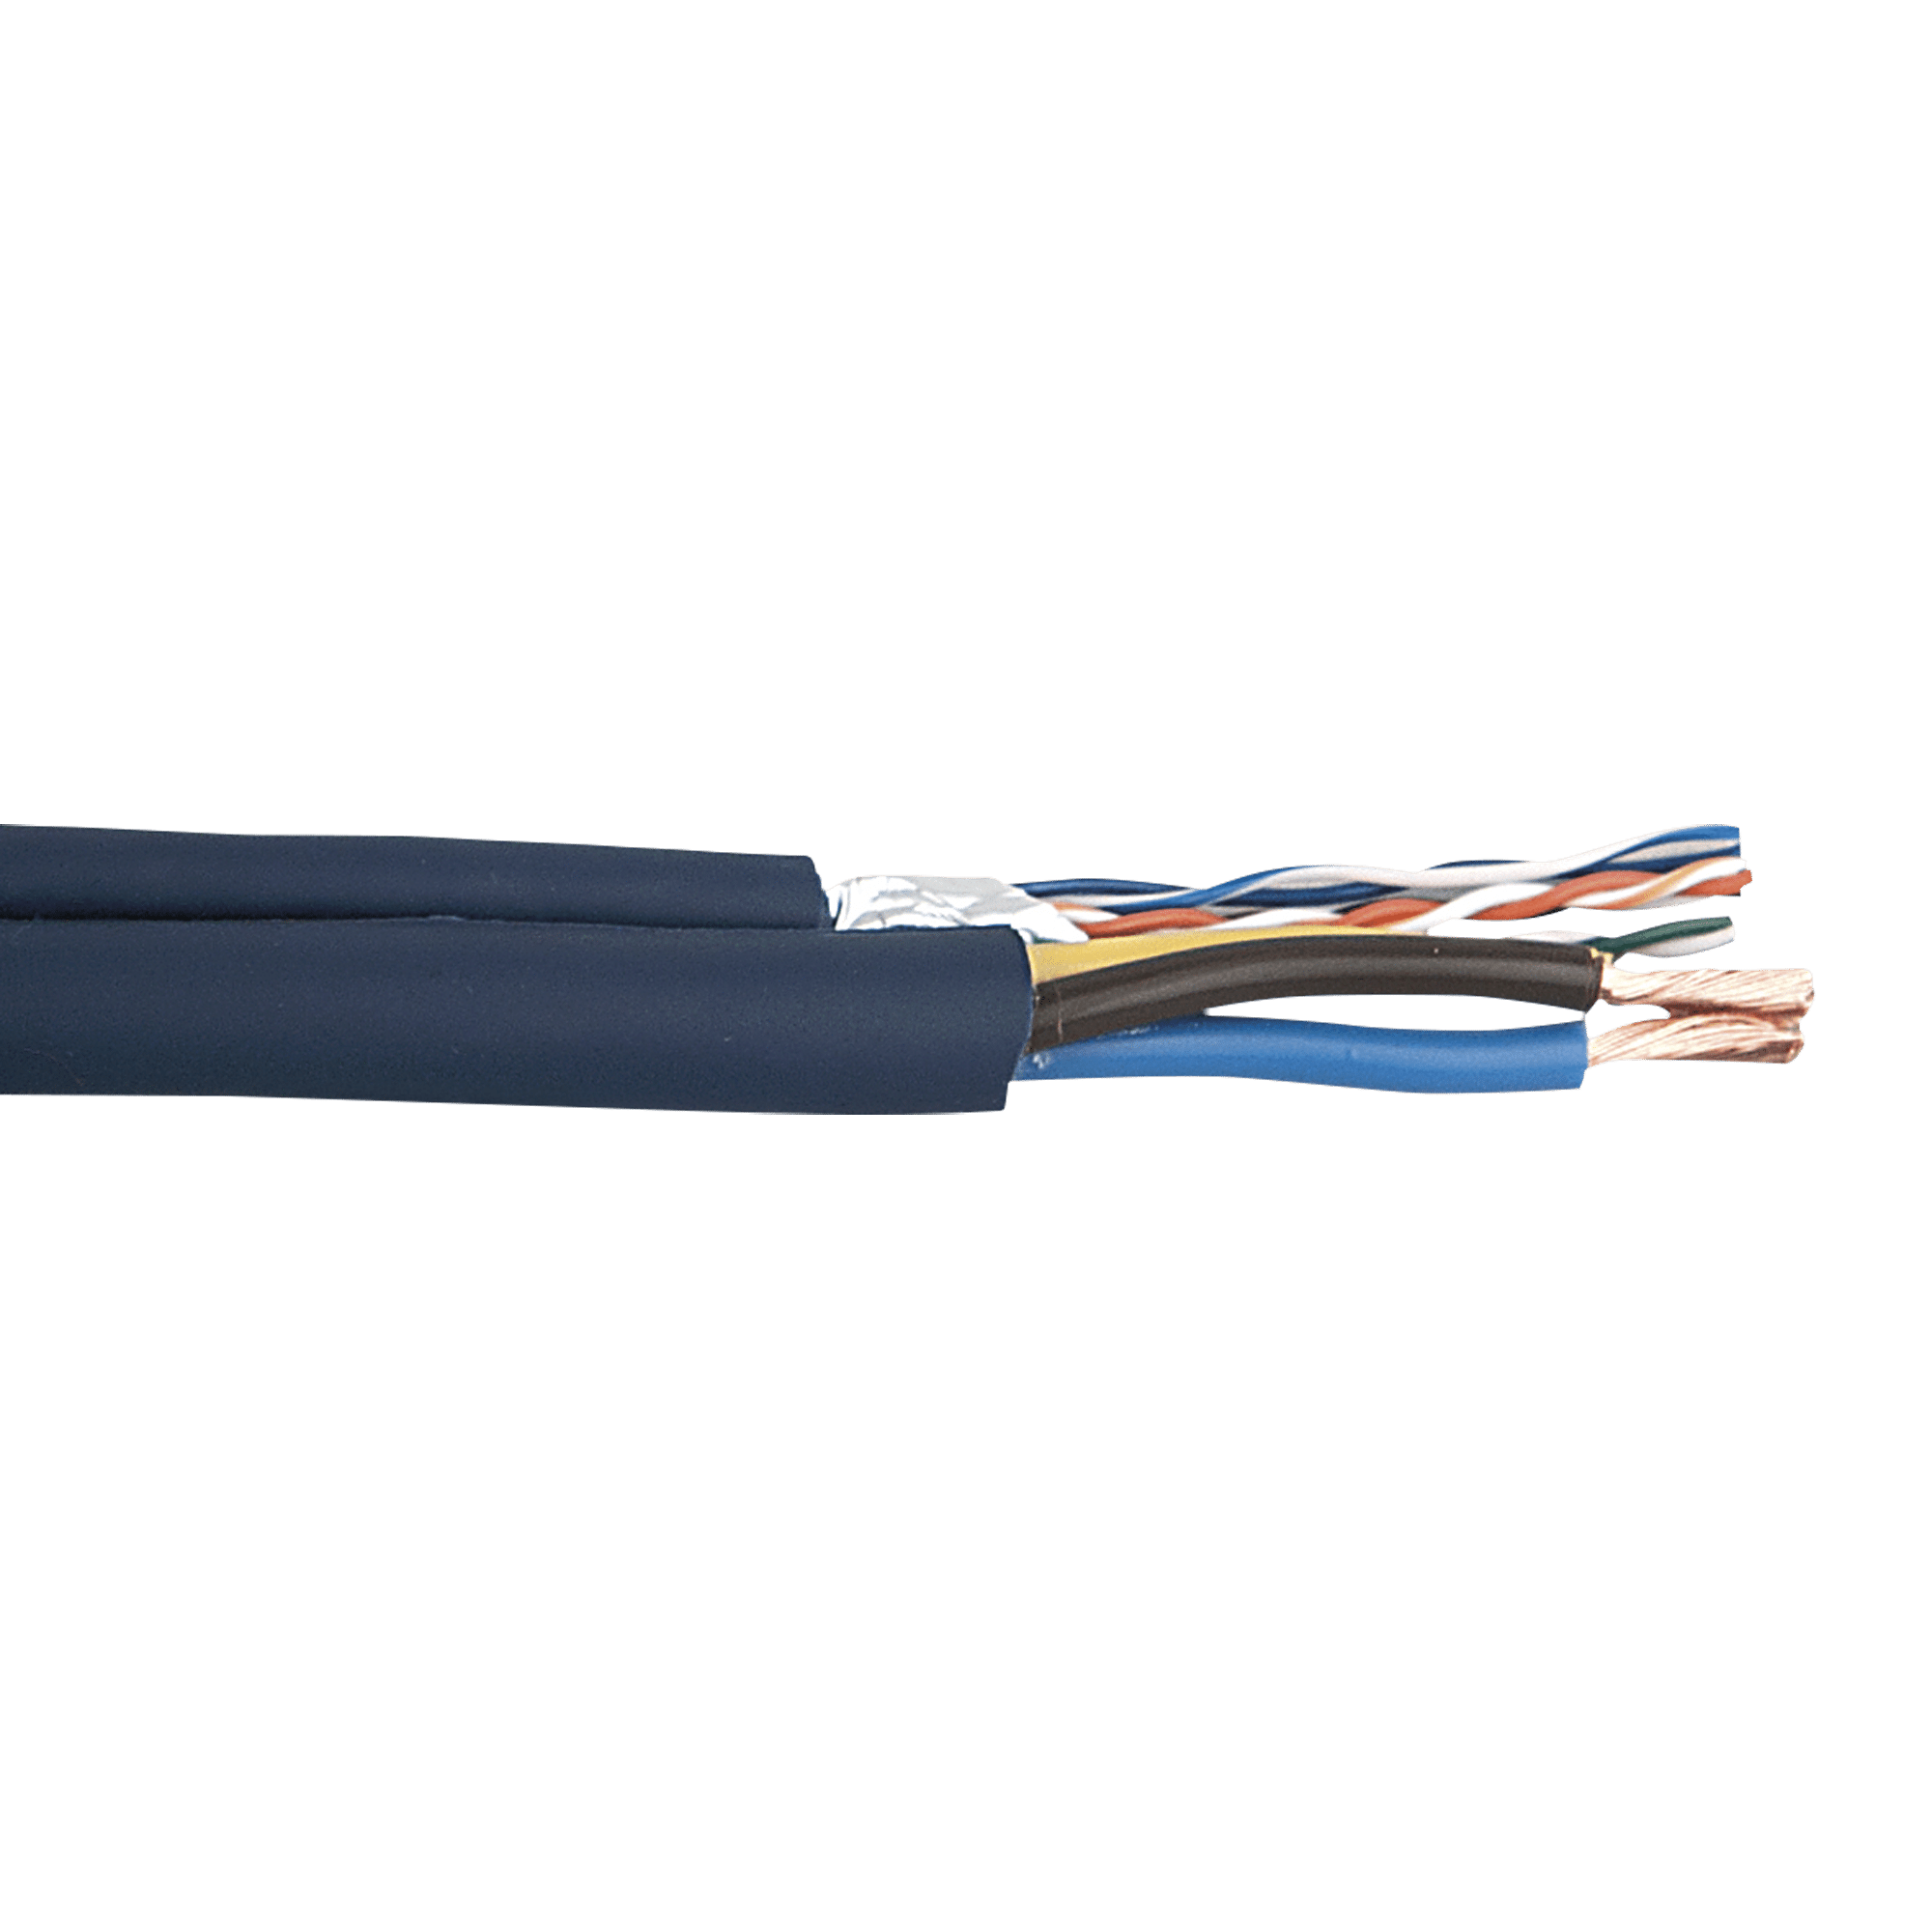 Flexible CAT5 + Power cable 3x 1.5 mm² - Onlinediscowinkel.nl